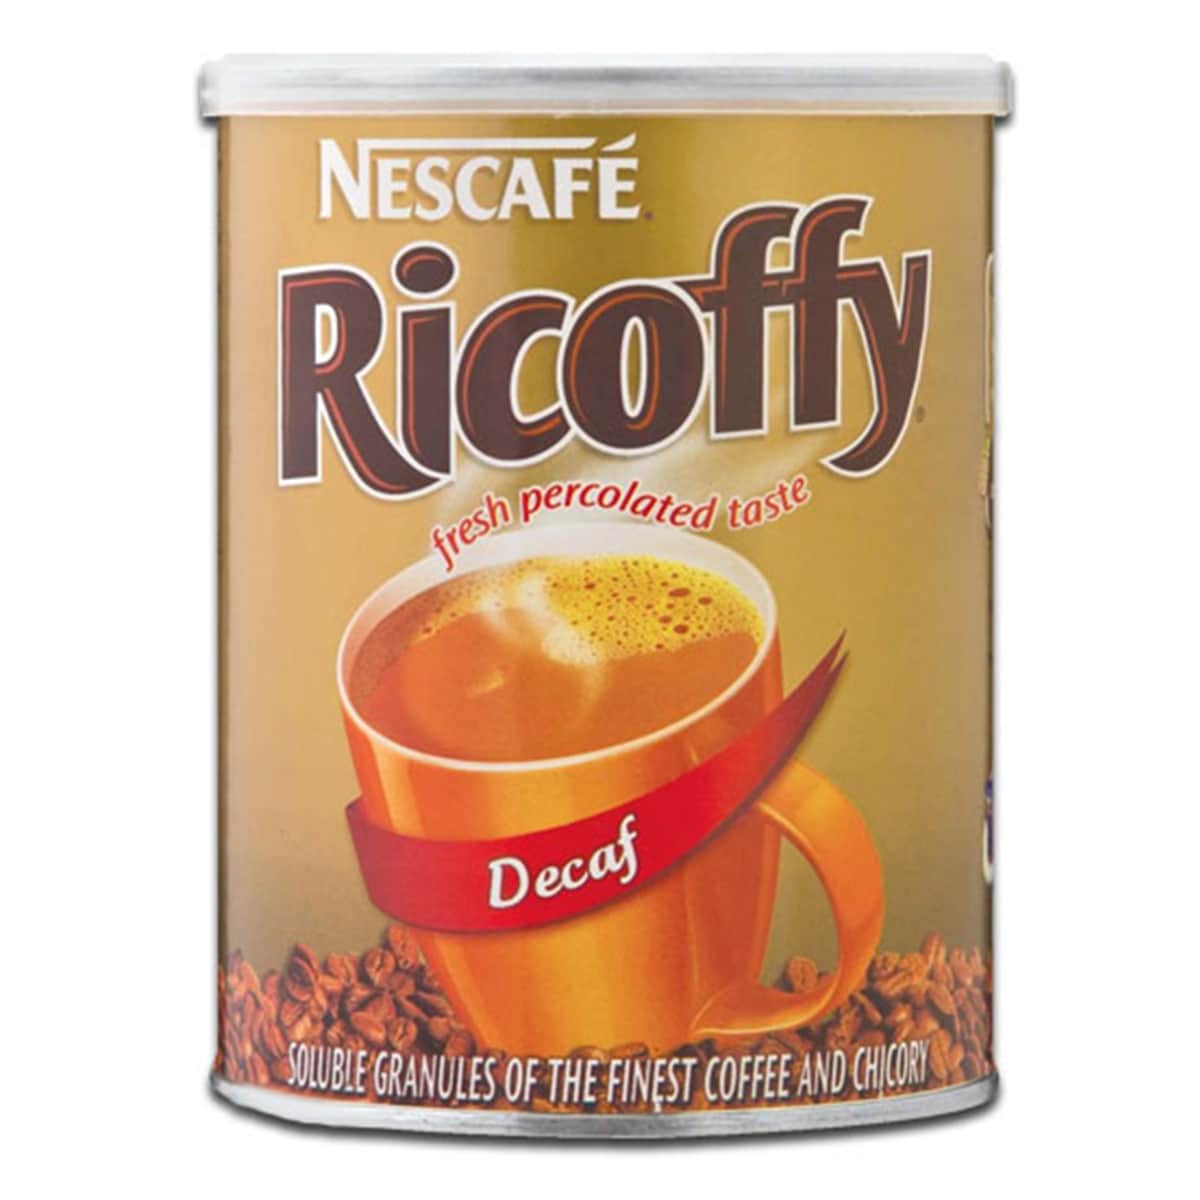 Buy Nestle Nescafe Ricoffy Decaf (Fresh Percolated Taste) - 250 gm